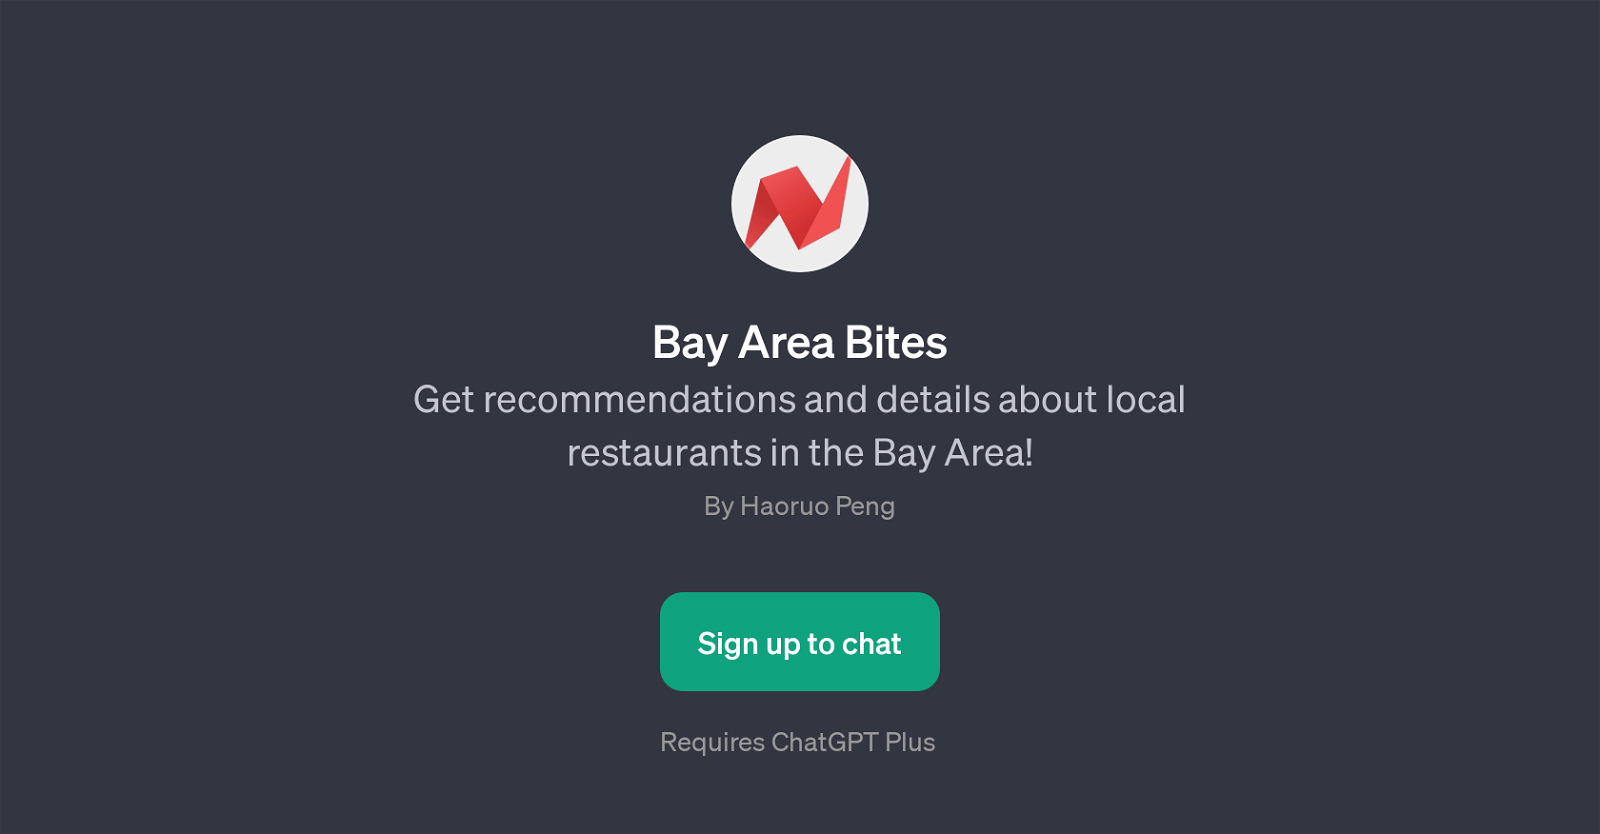 Bay Area Bites website